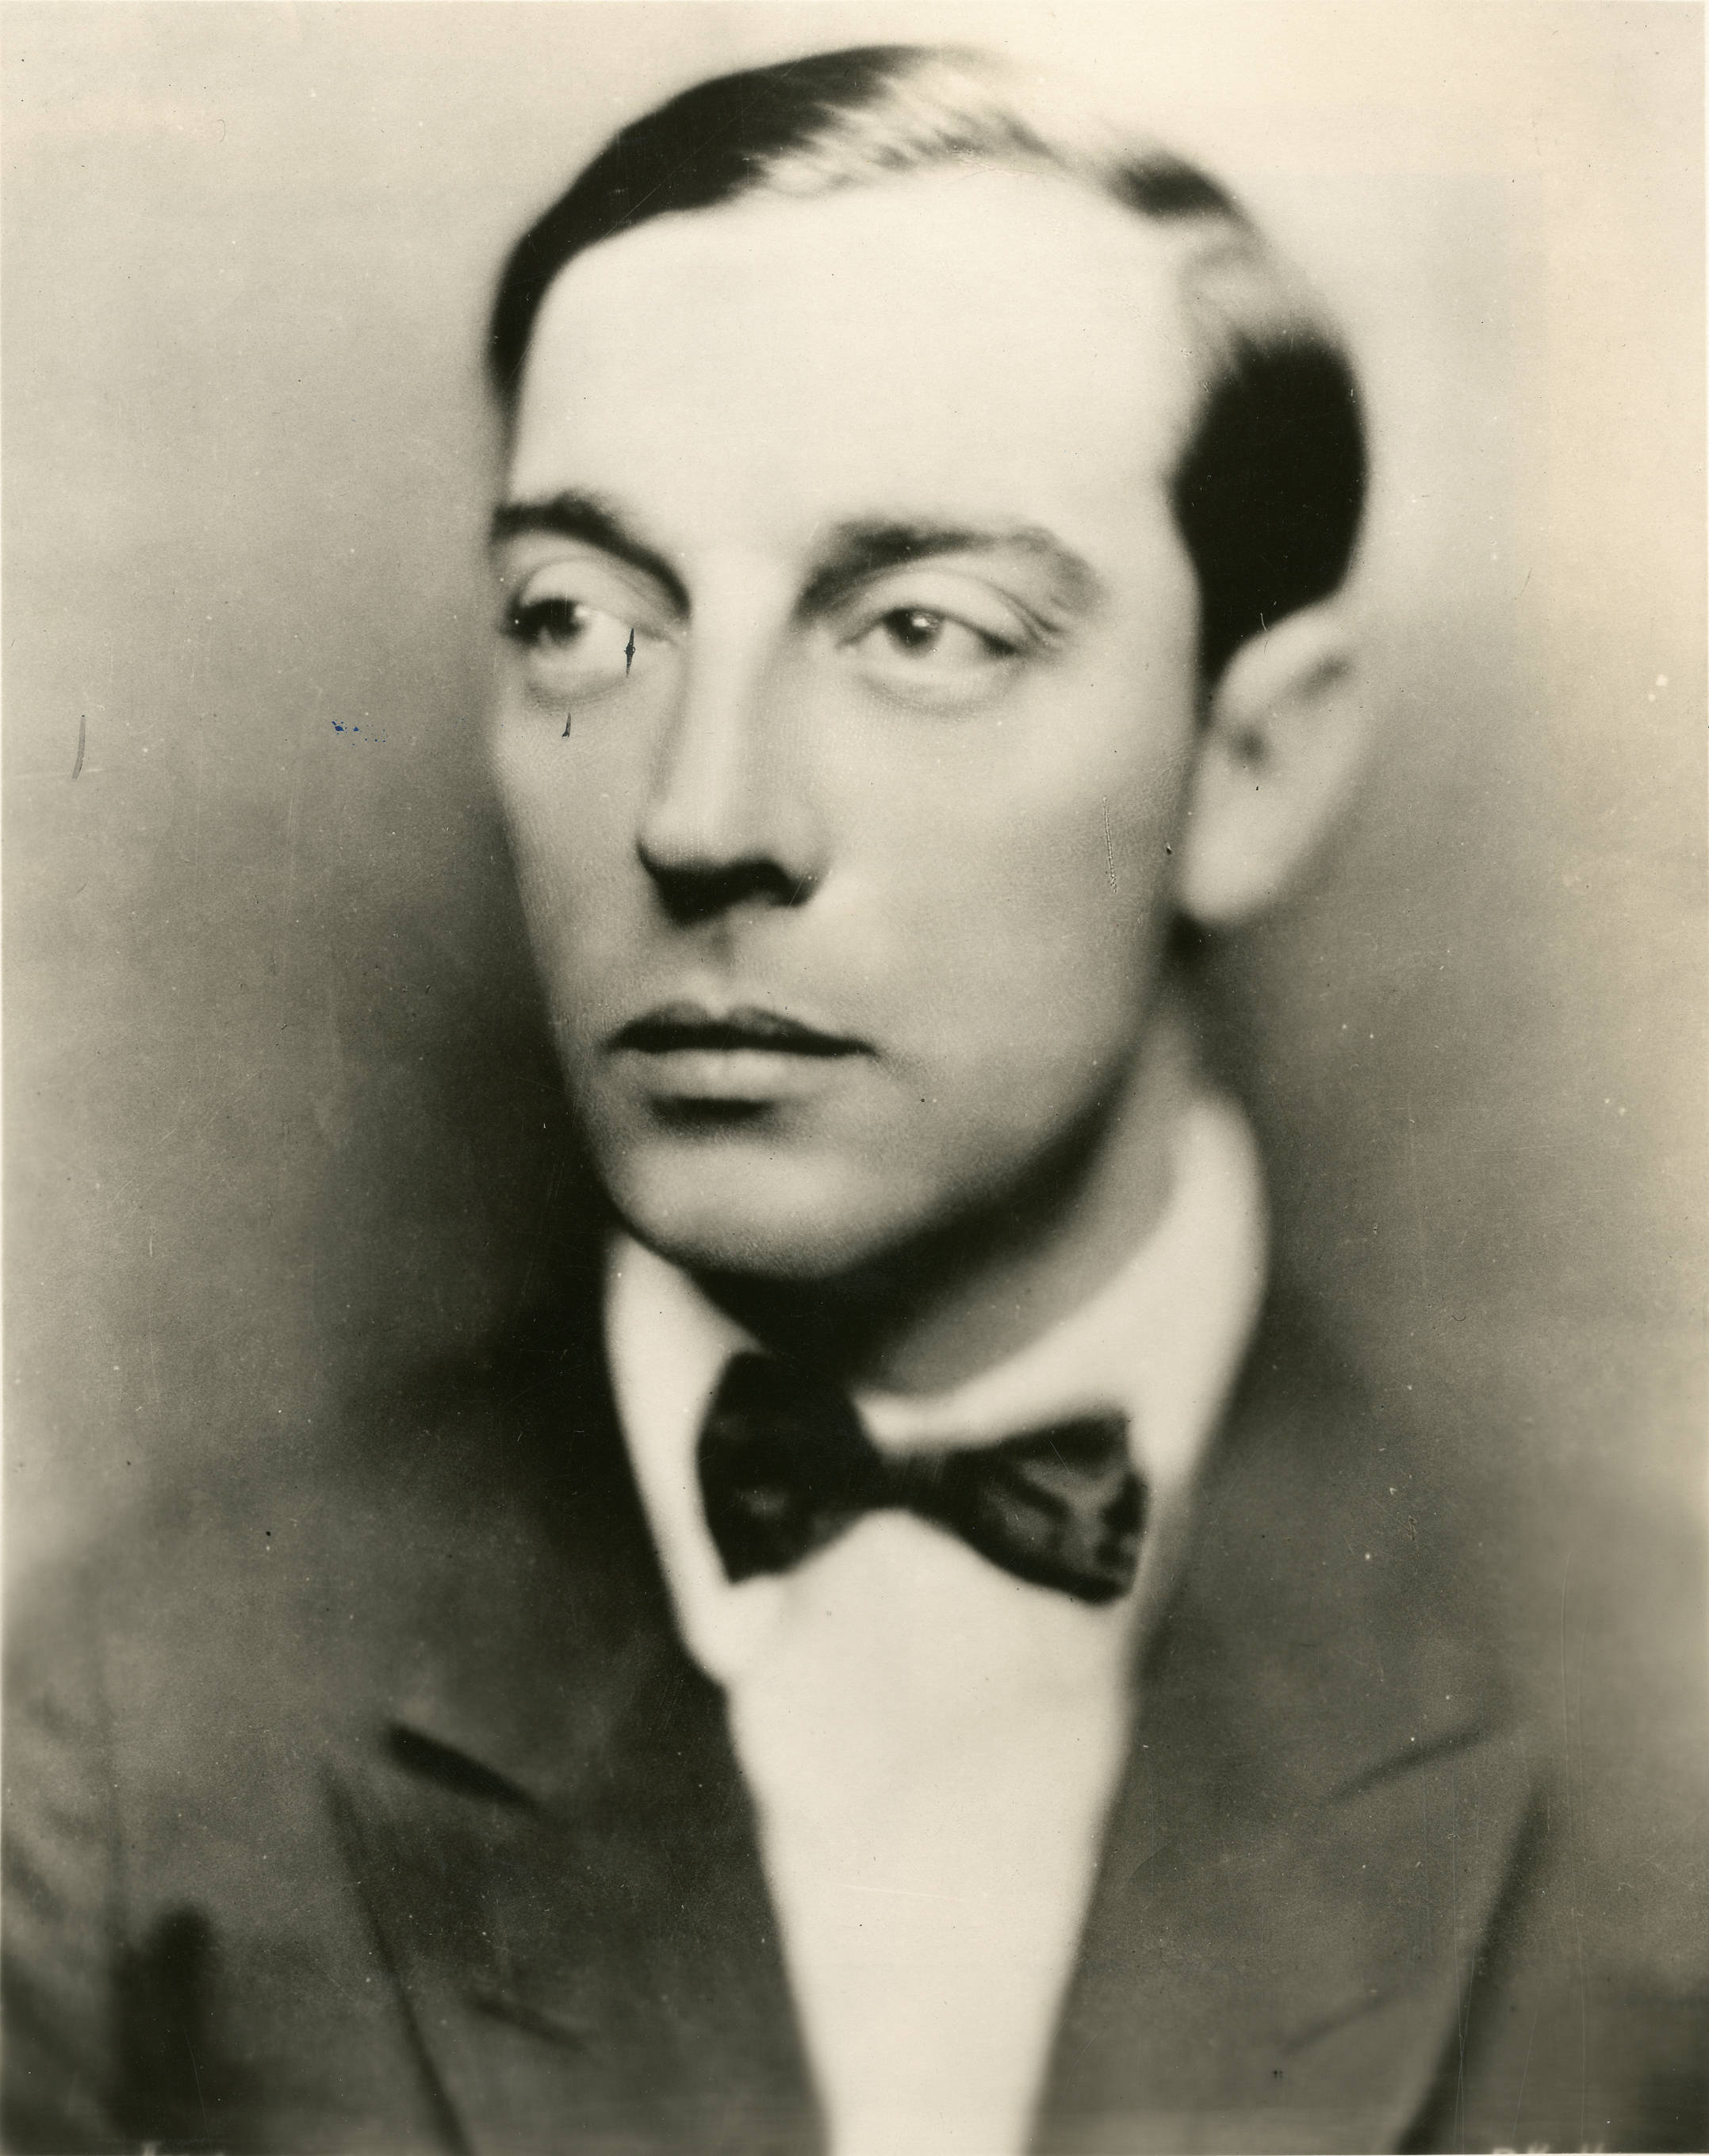 Buster Keaton filmography - Wikipedia